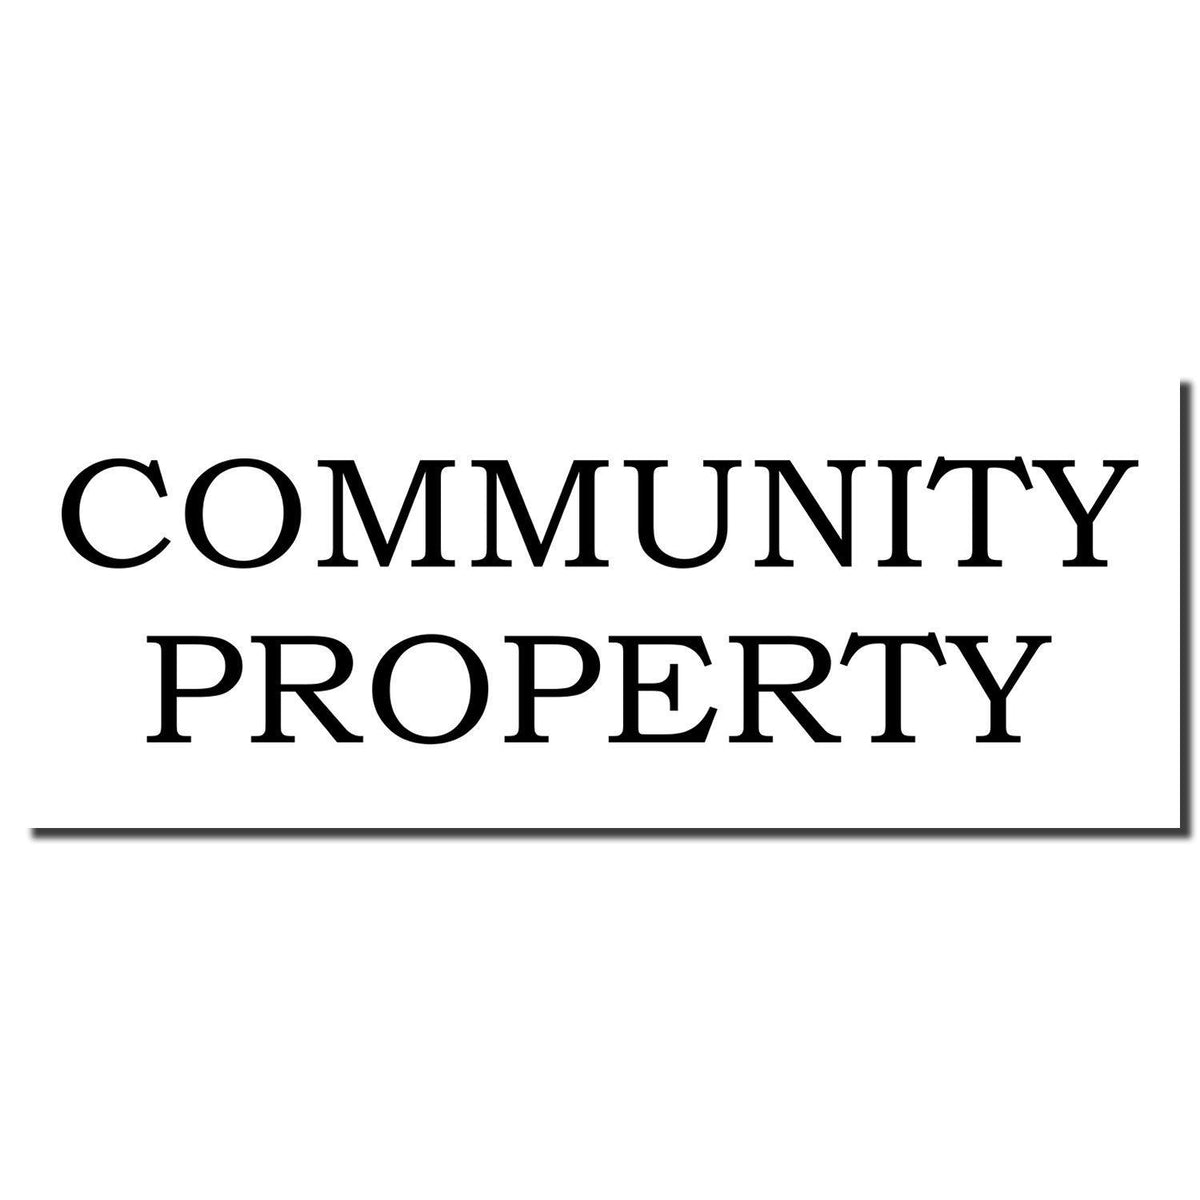 Enlarged Imprint Community Property Rubber Stamp Sample